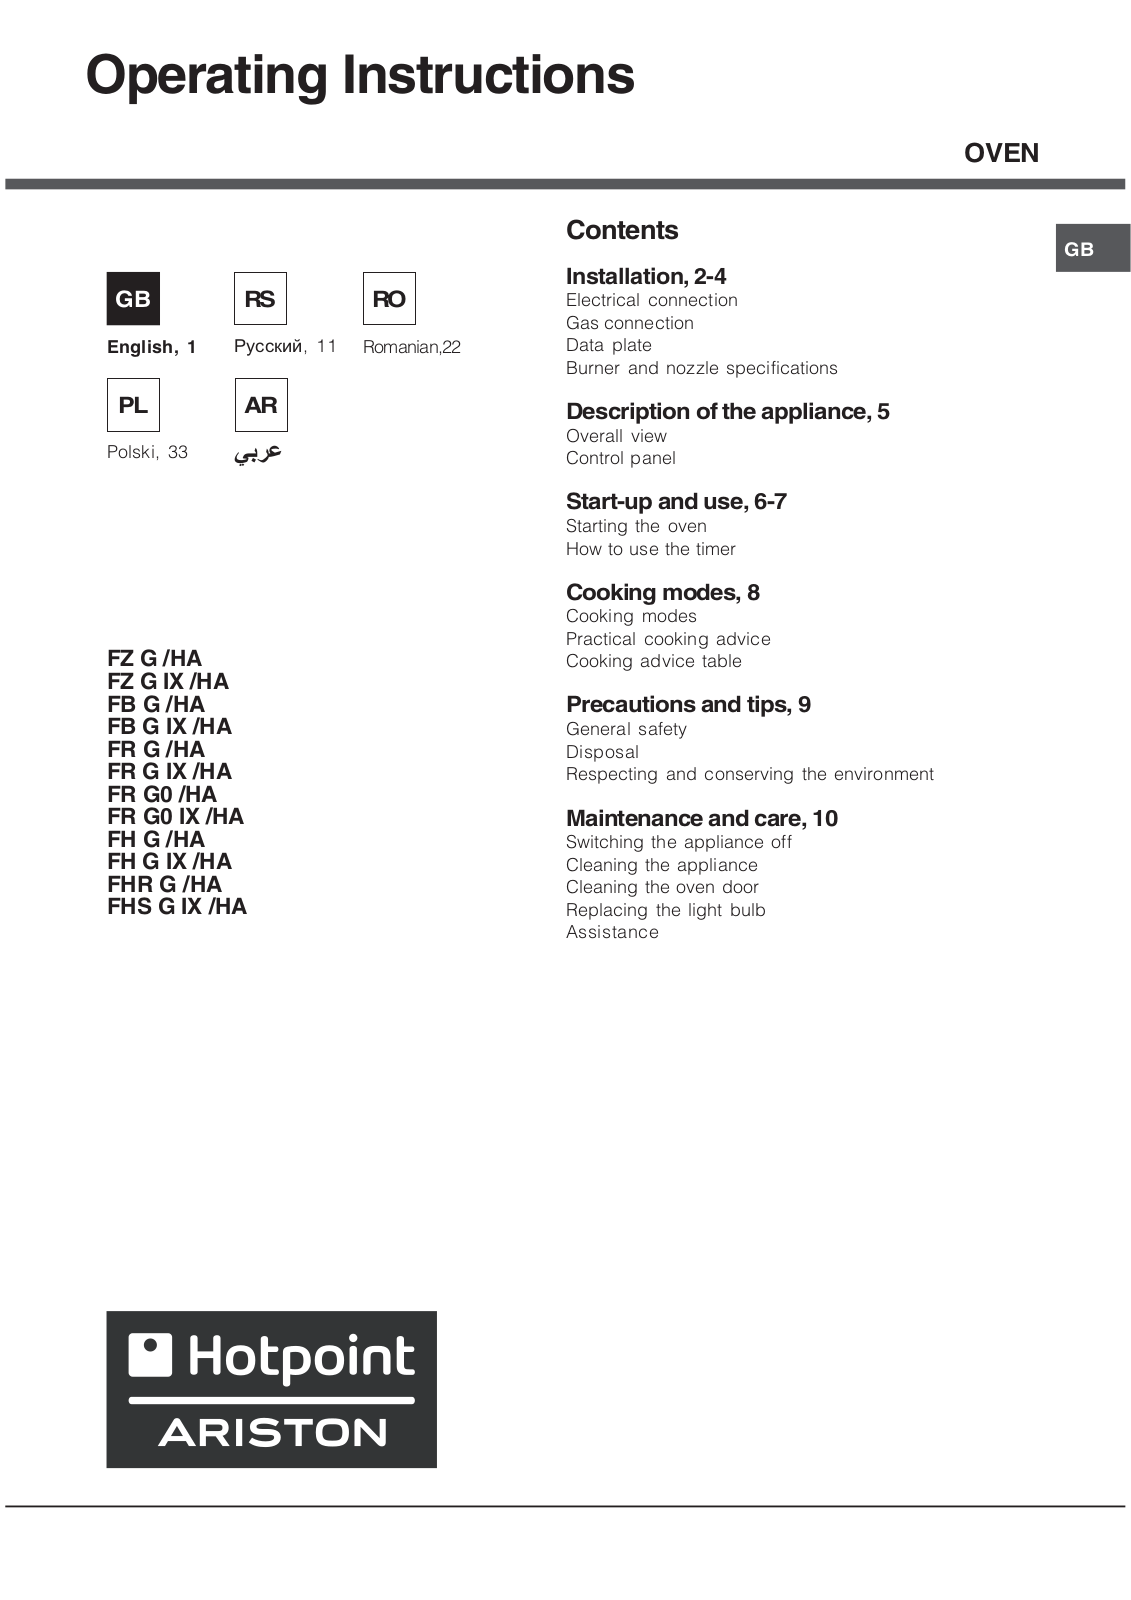 Hotpoint Ariston FB G, FH G IX/HA, FHS G IX/HA Manual